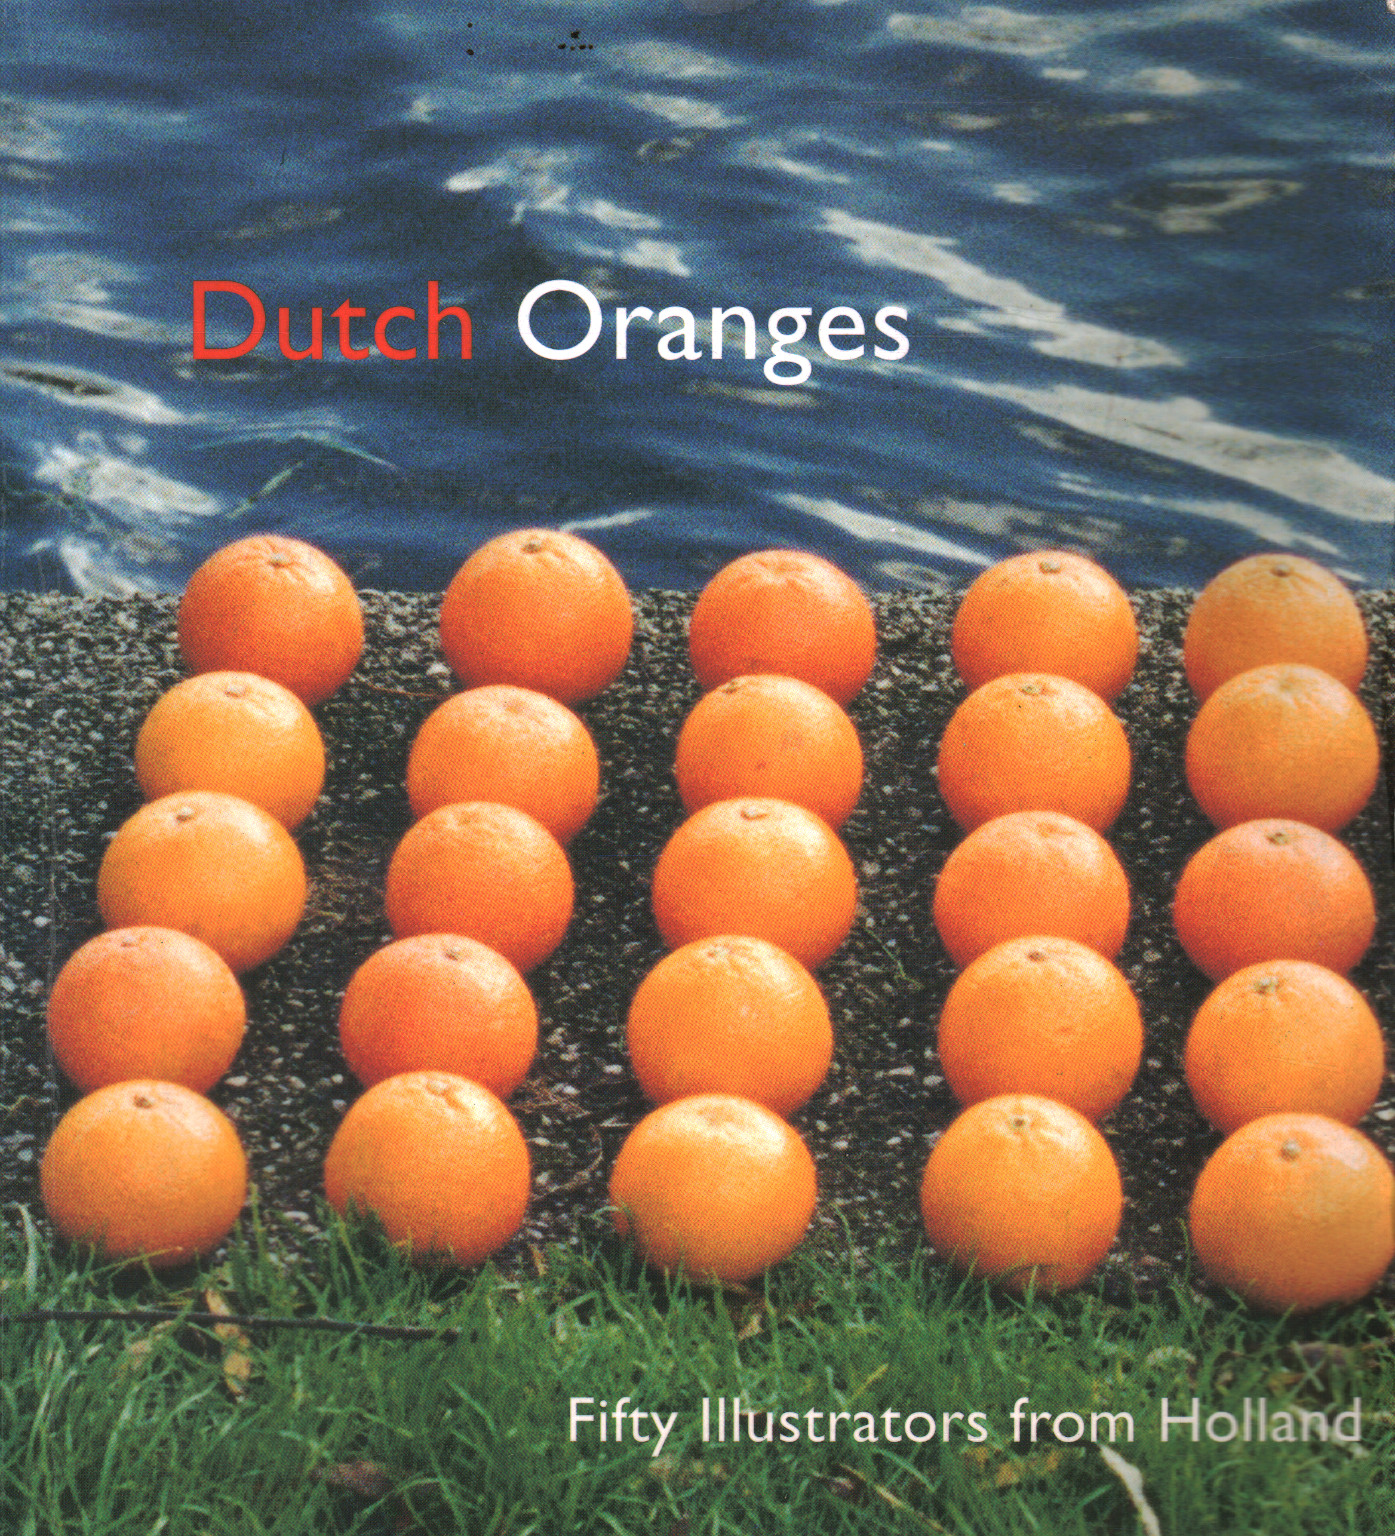 Dutch Oranges, s.a.